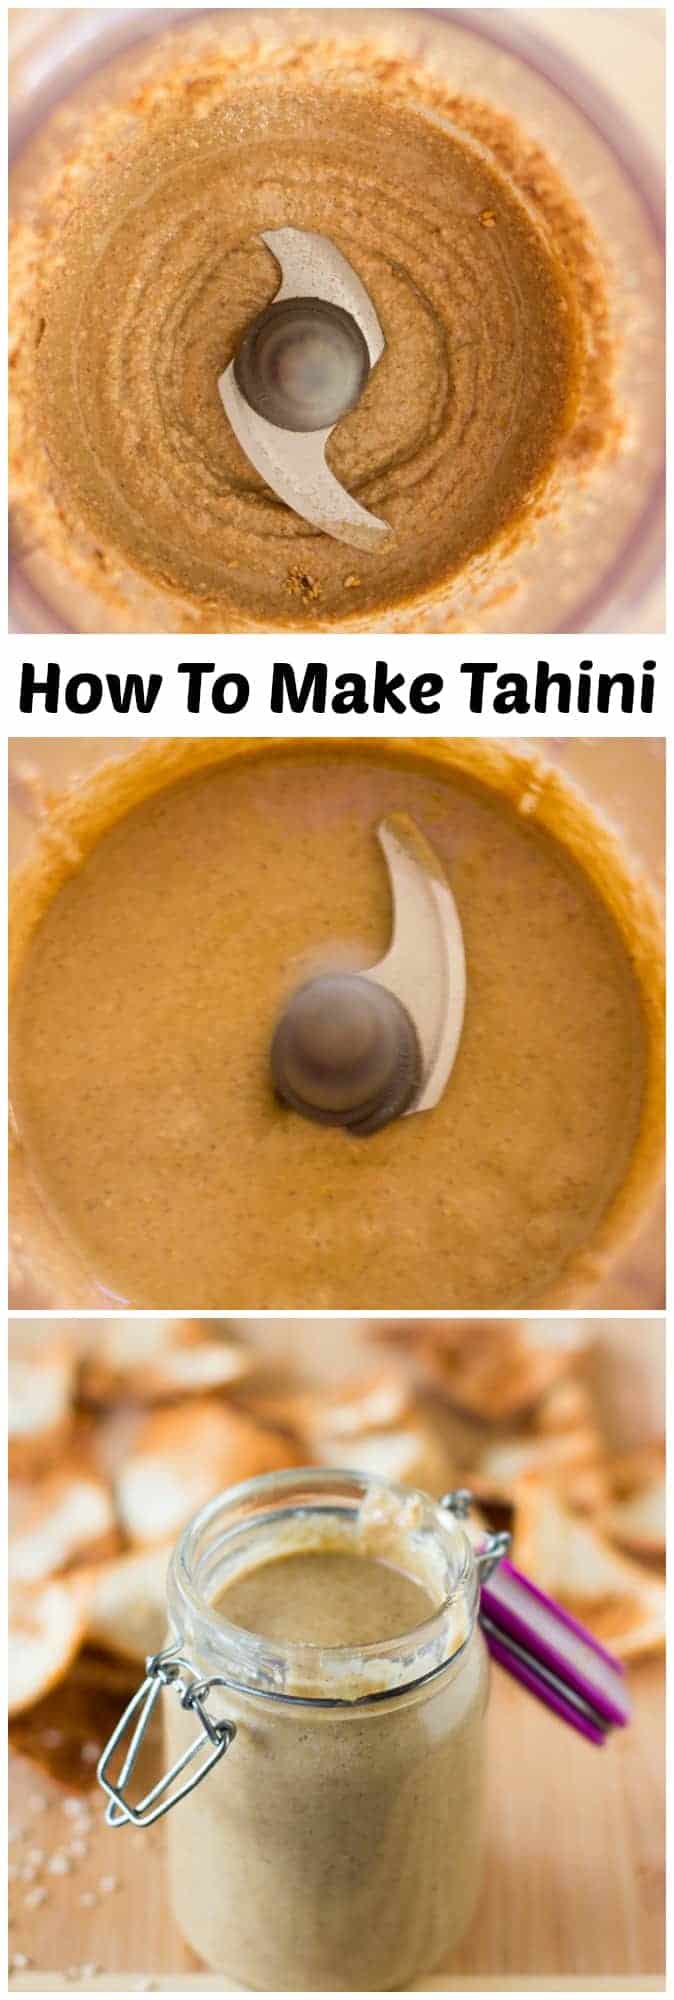 How To Make Tahini (11 Ingredients)